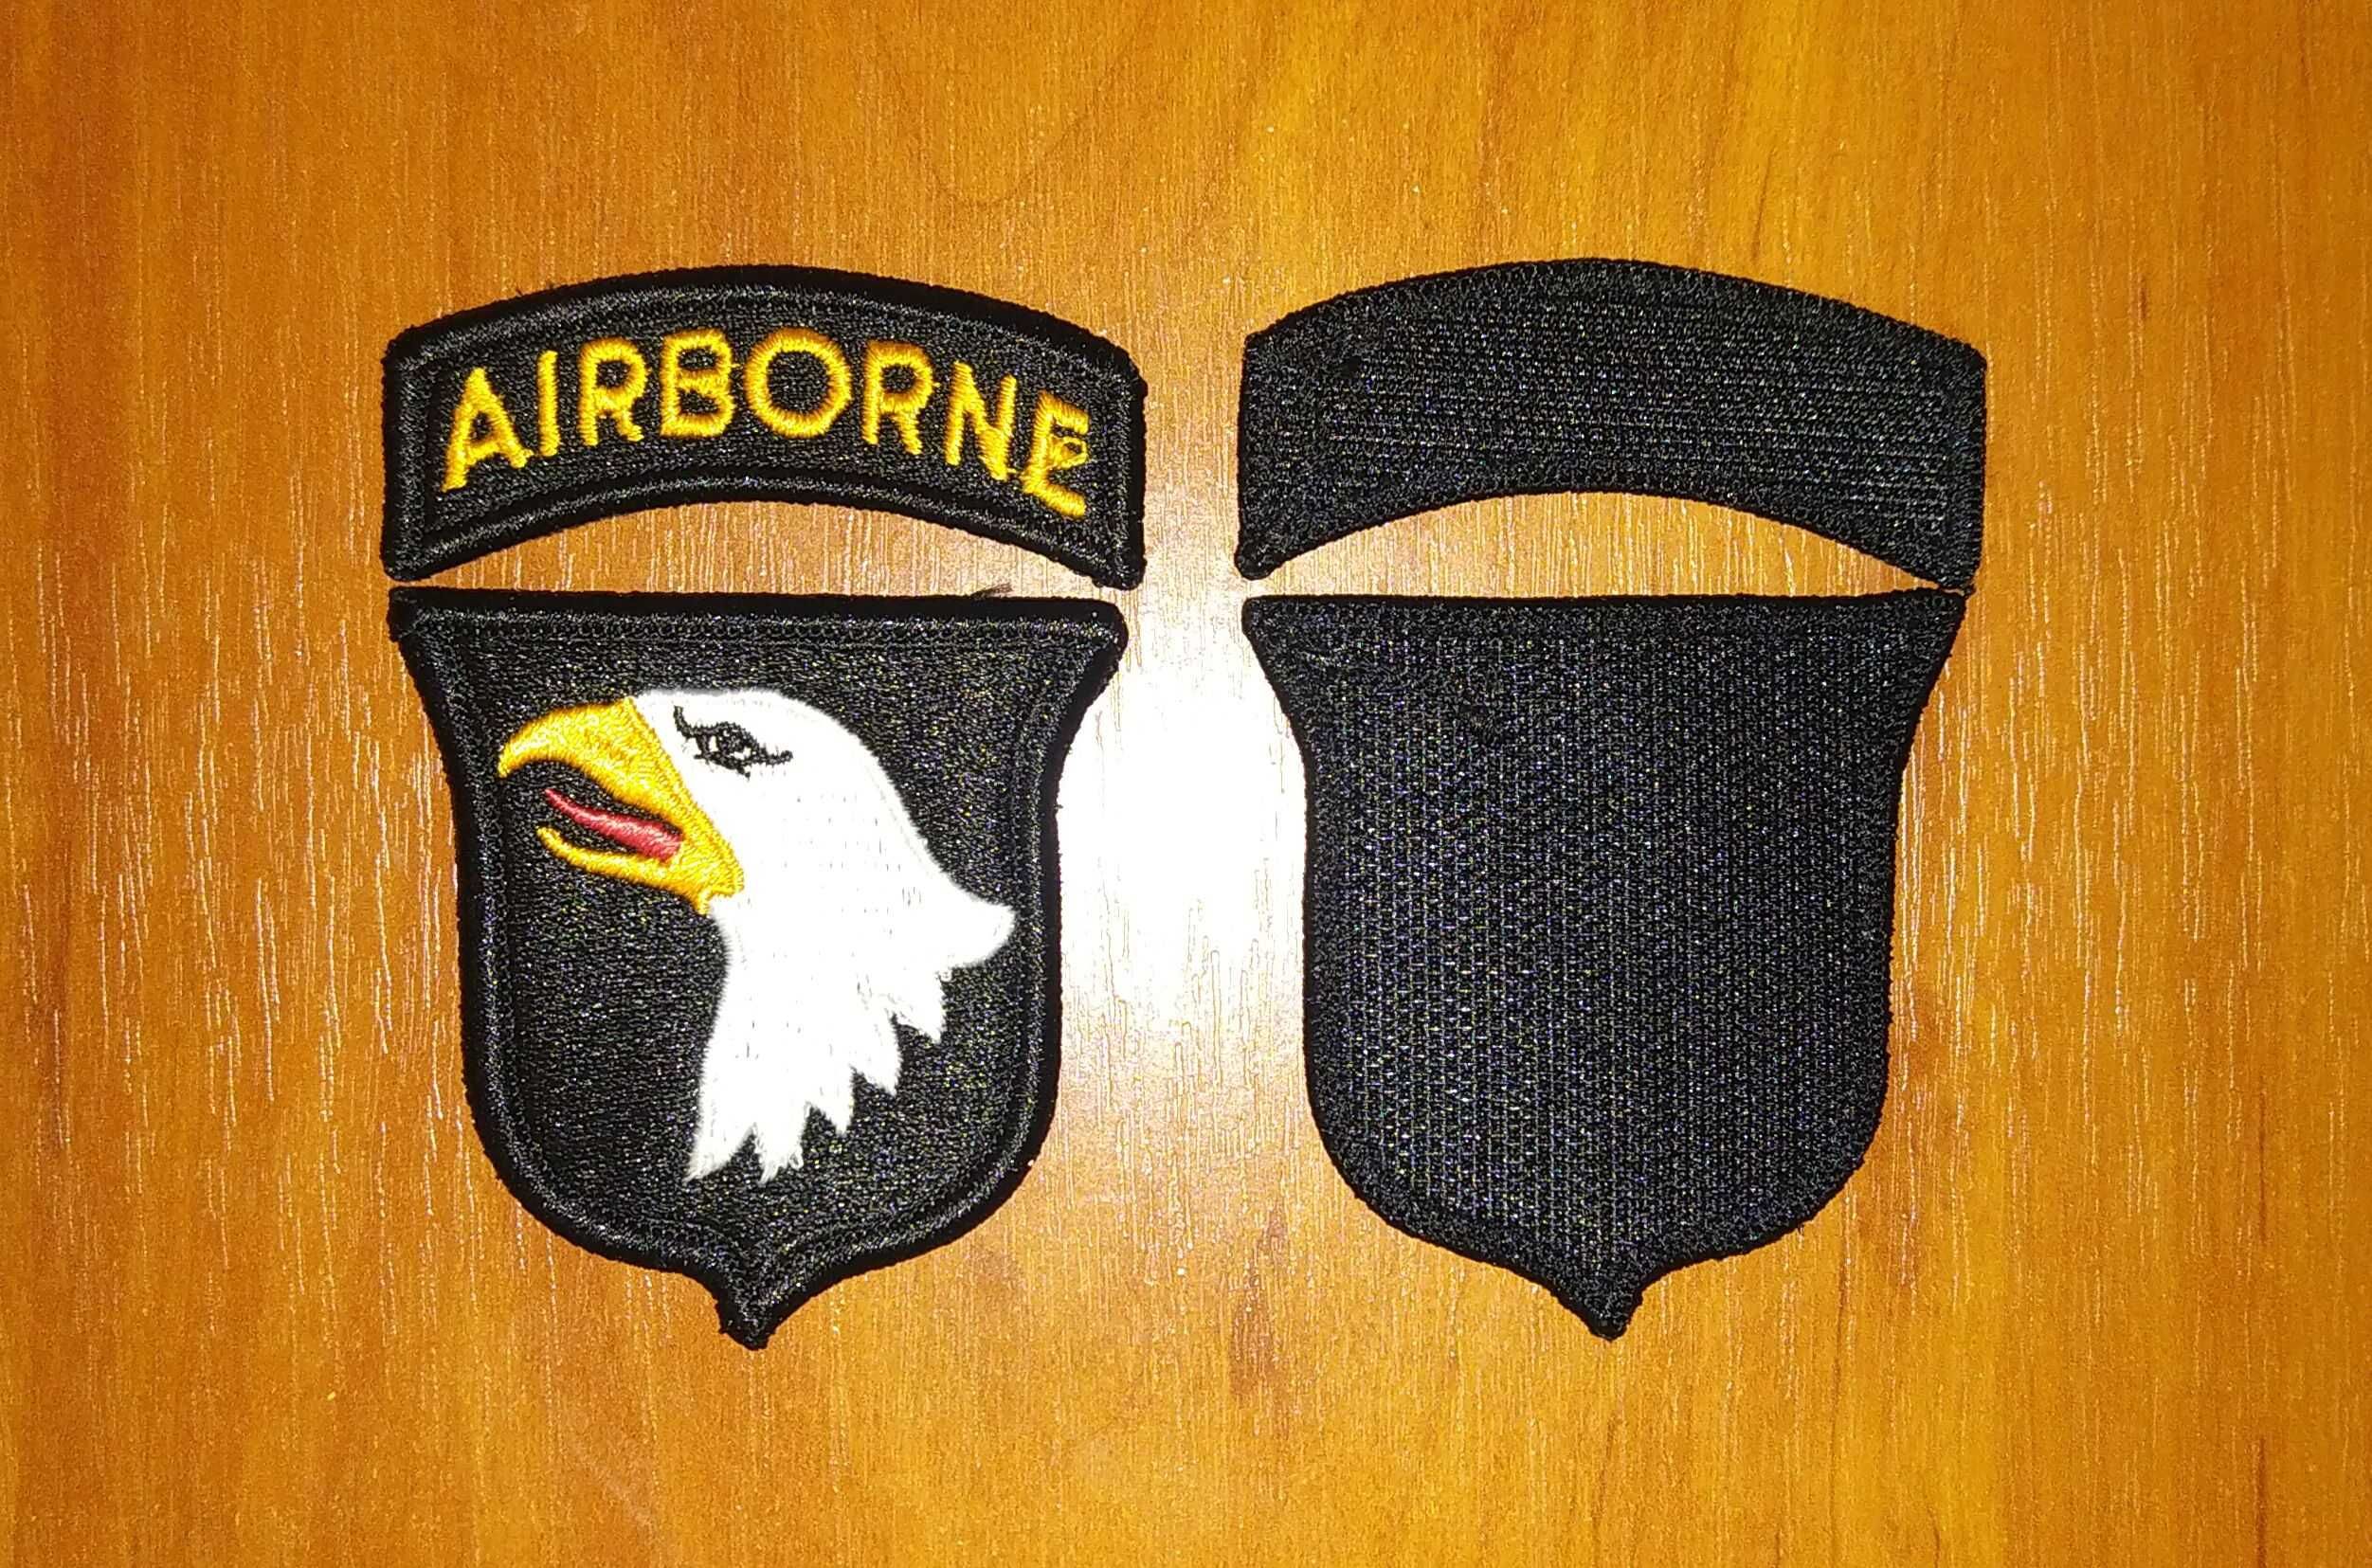 Шеврон US Army - 101st Airborne Division (десантники) - липучка